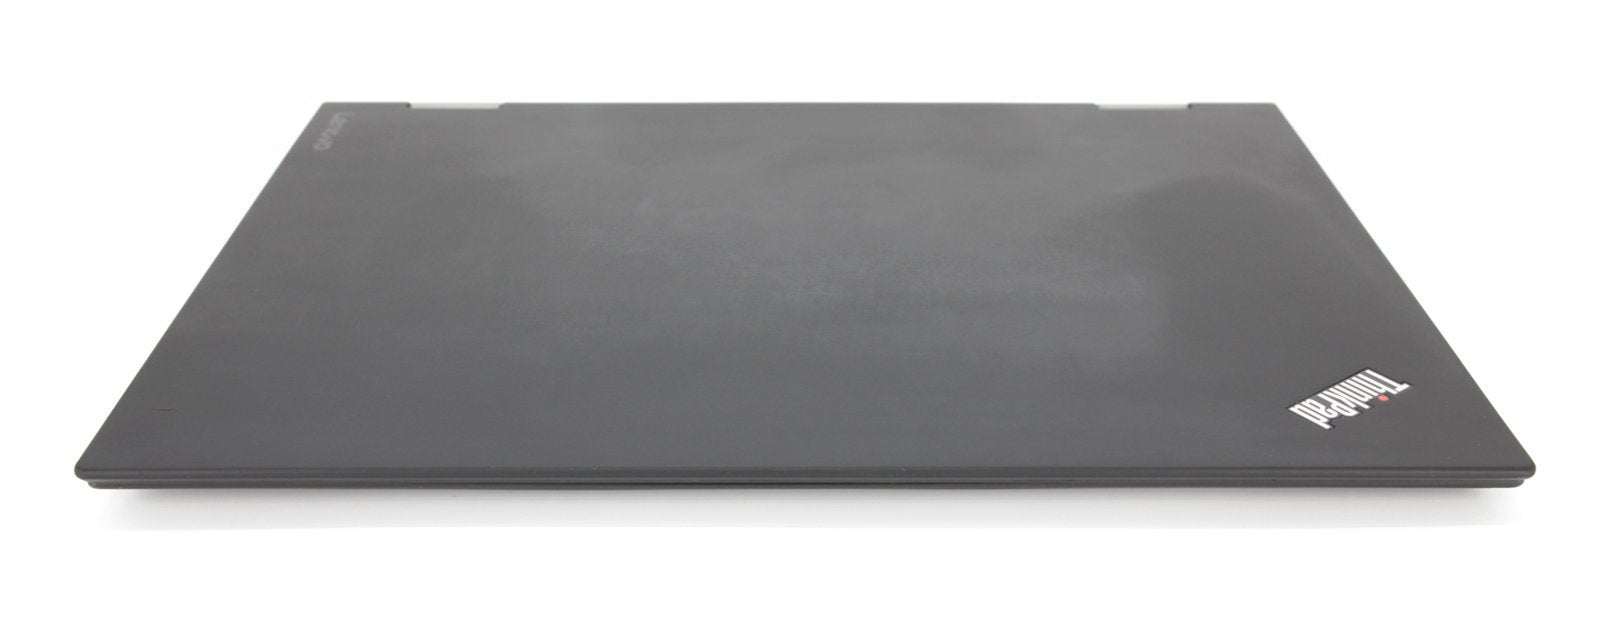 Lenovo Thinkpad X1 Yoga 2nd Gen Laptop: Core i7-7600U, 16GB RAM, 512GB, Warranty - CruiseTech